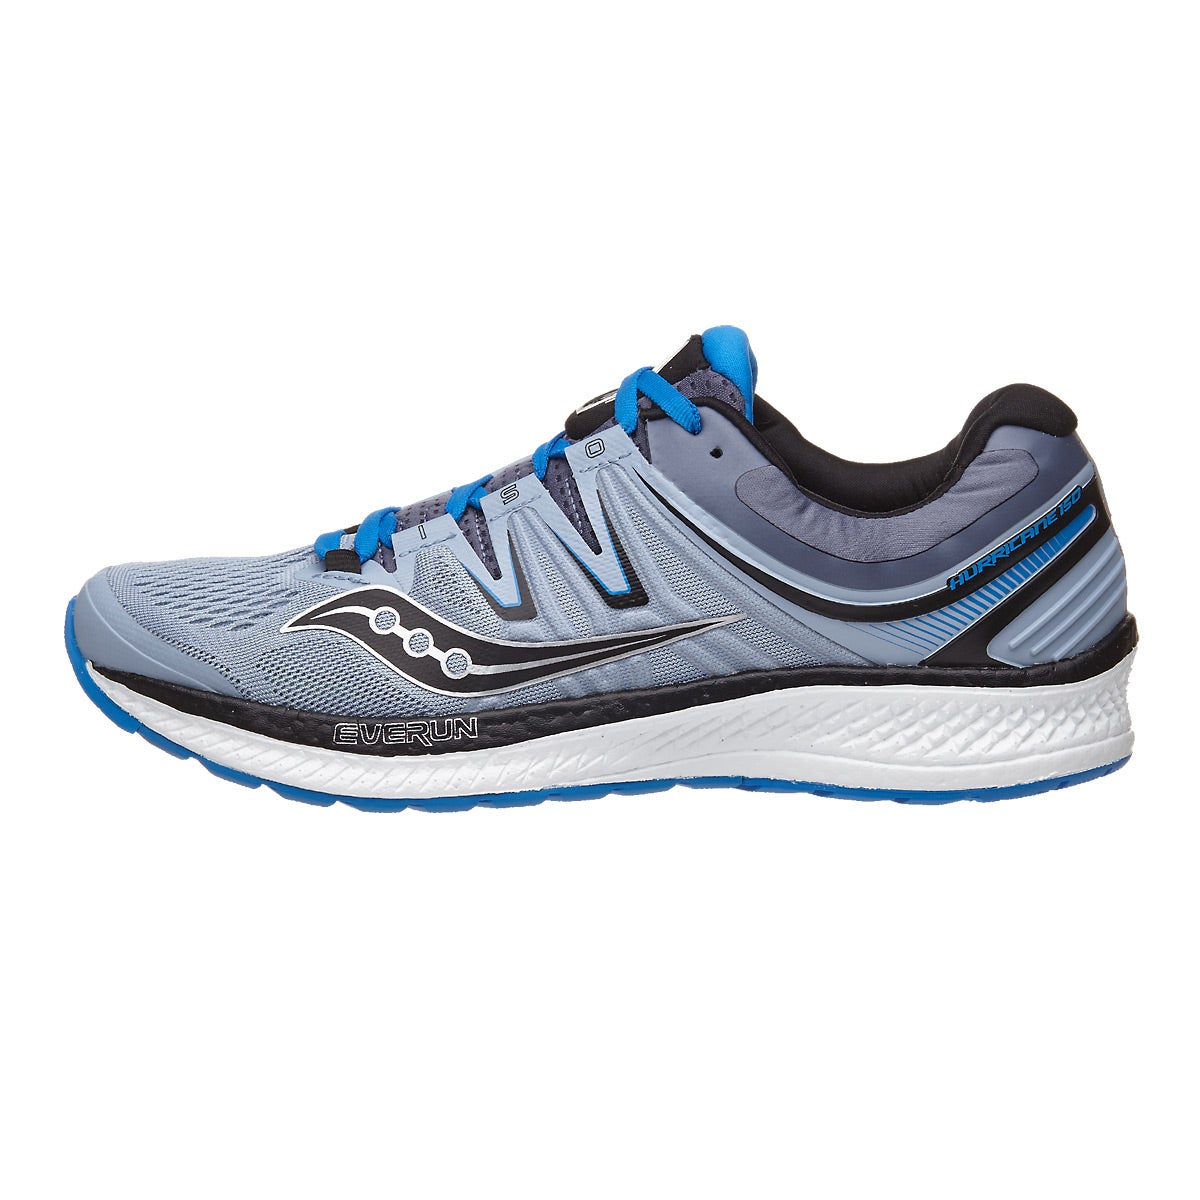 Saucony Hurricane ISO 4 Men's Shoes Grey/Blue/Black 360° View | Running ...